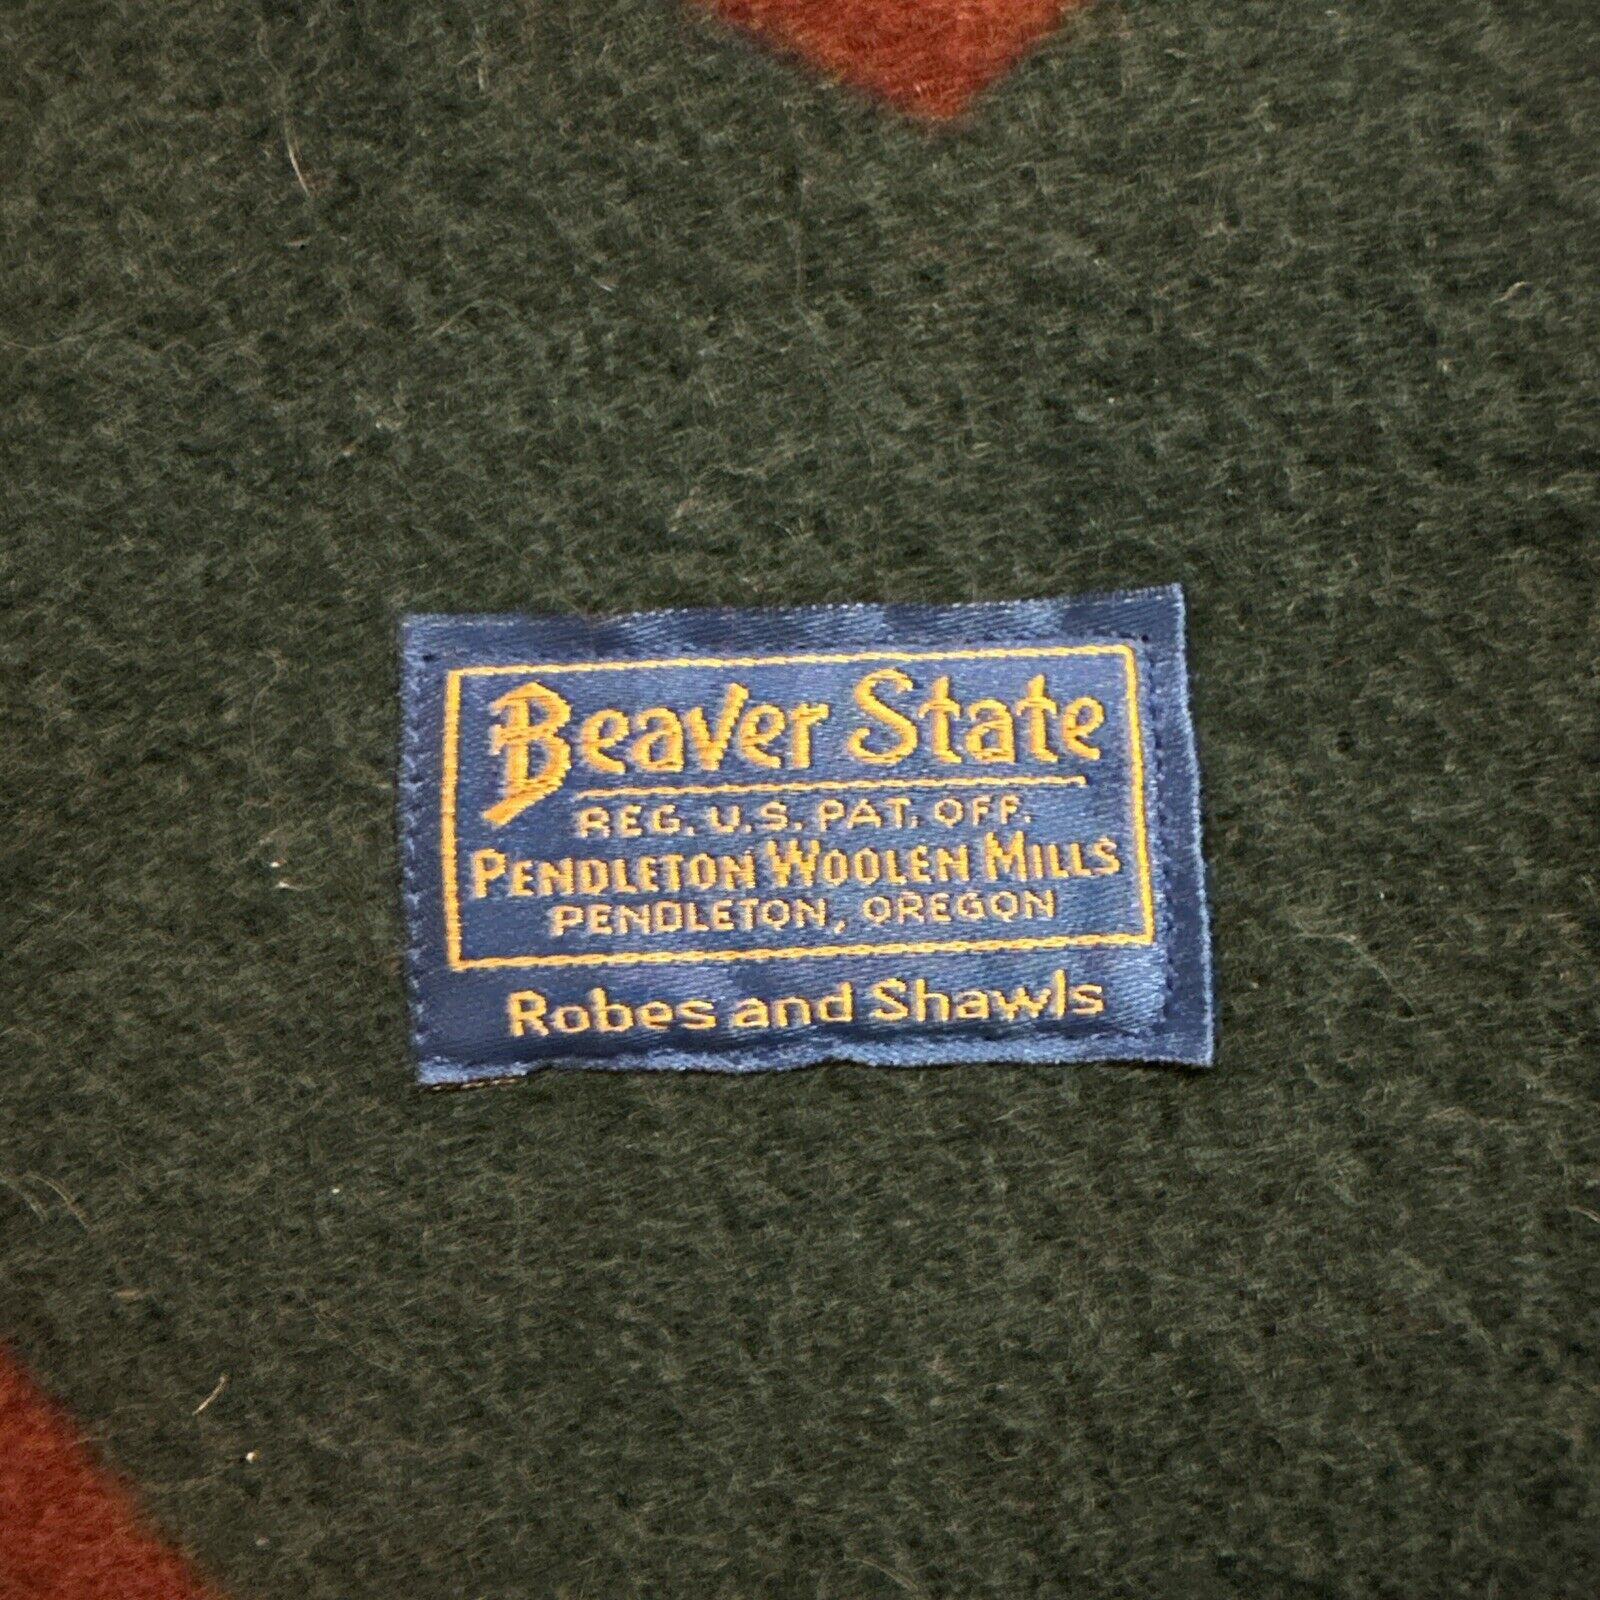 pendleton beaver state wool blanket vintage